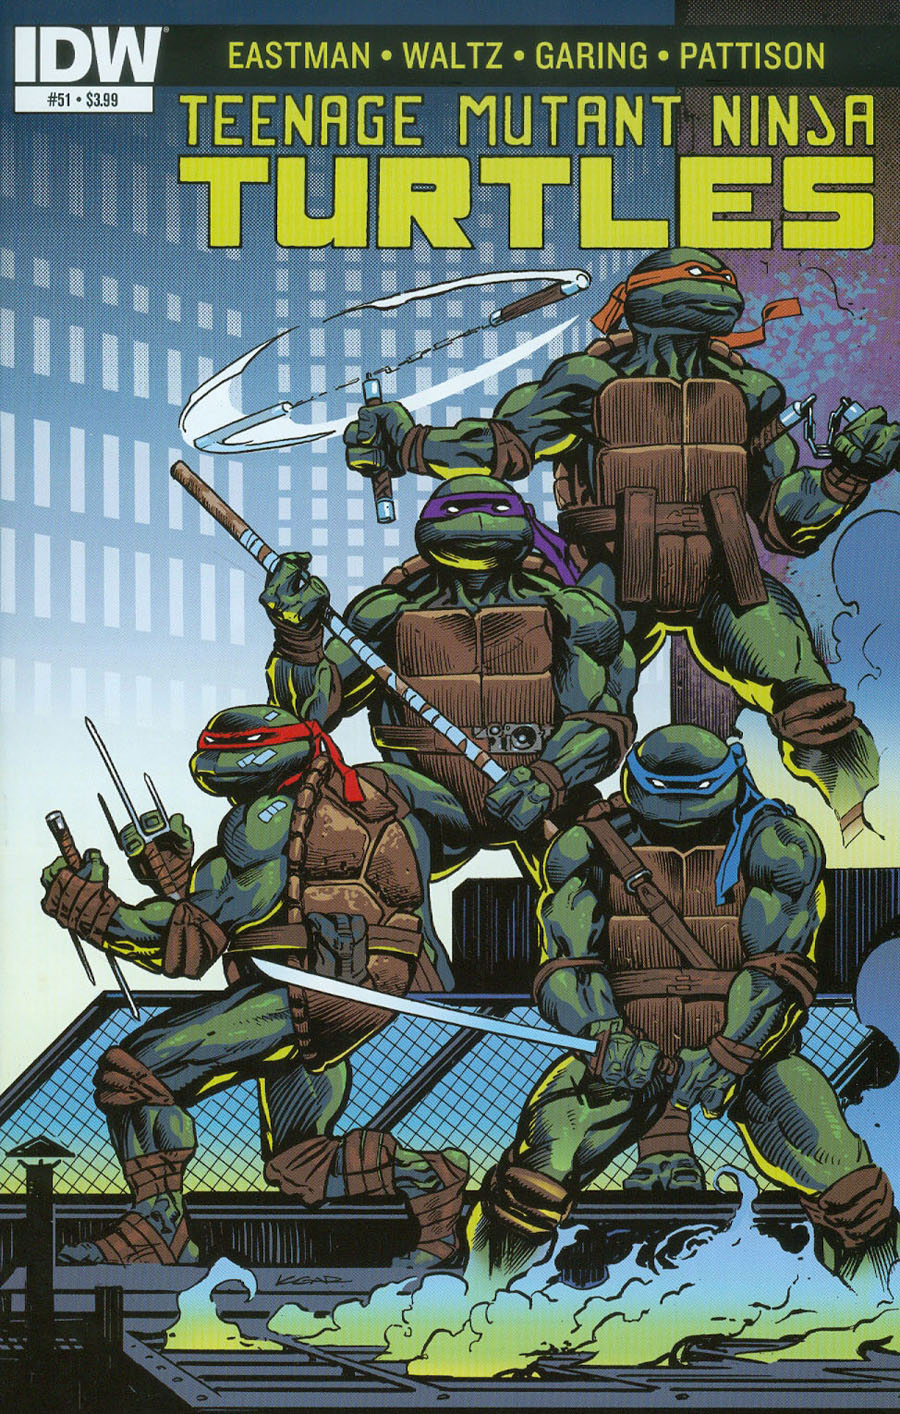 Teenage Mutant Ninja Turtles Vol 5 #51 Cover A Regular Ken Garing Cover